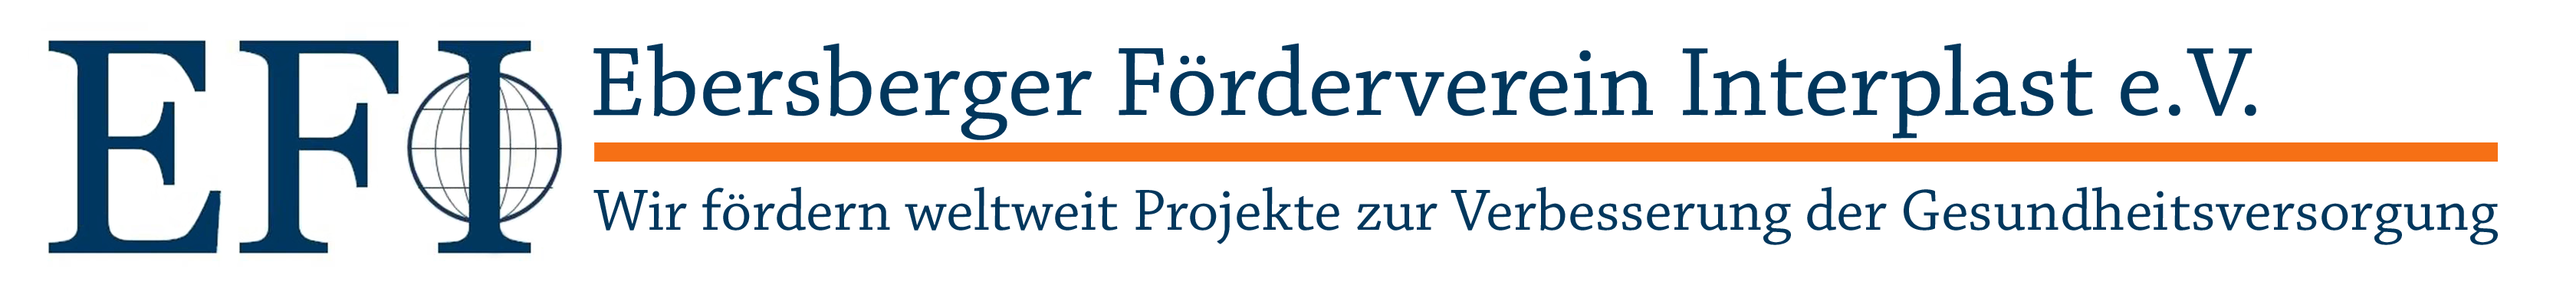 EFI-Ebersberger-Foerderverein-Interplast-eV